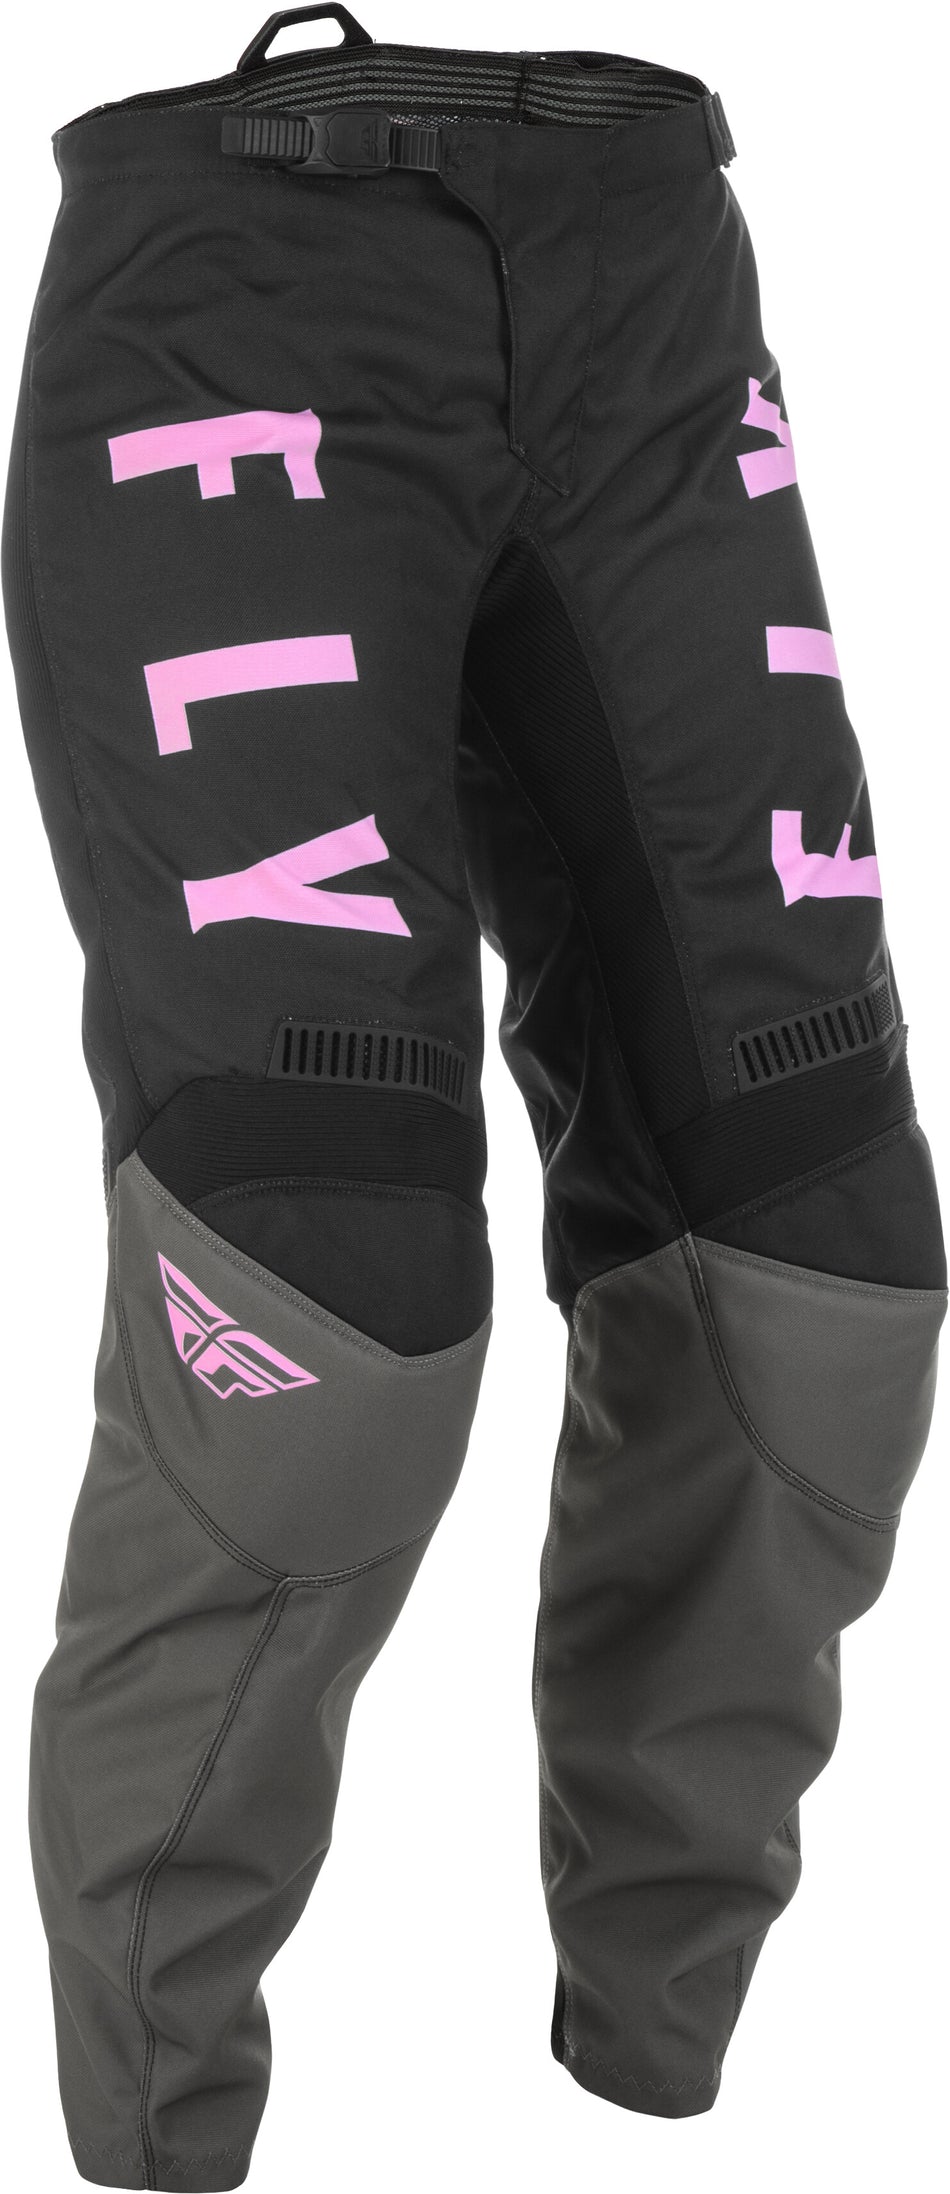 FLY RACING Women's F-16 Pants Grey/Black/Pink Sz 13/14 375-83110